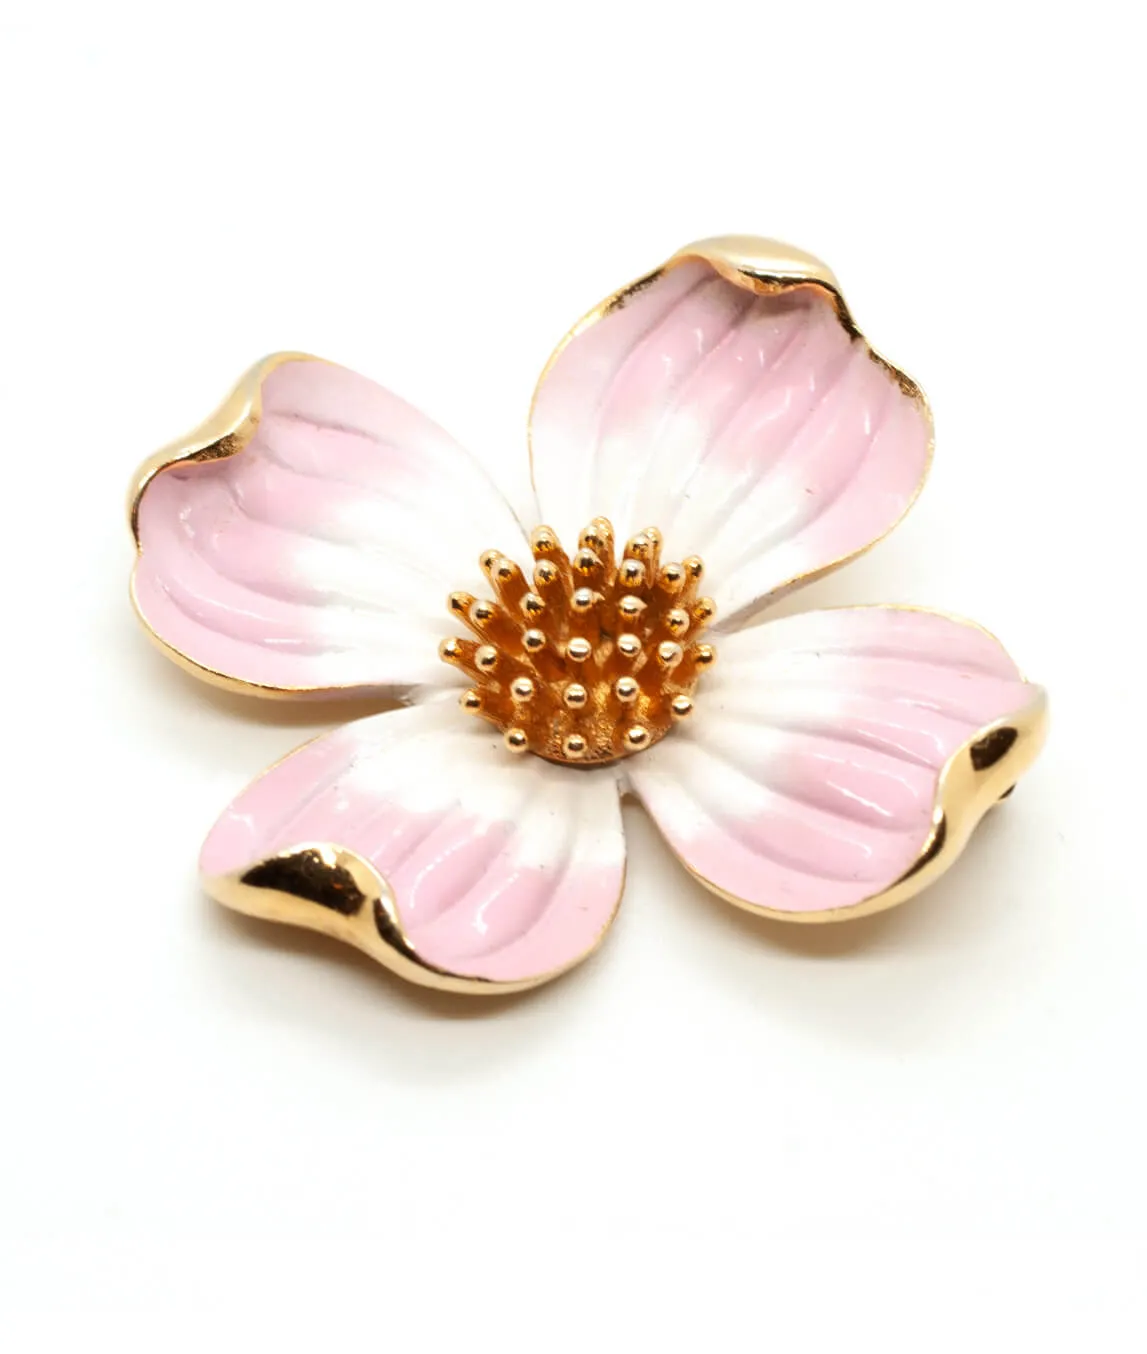 Crown Trifari dogwood flower brooch rare pink version